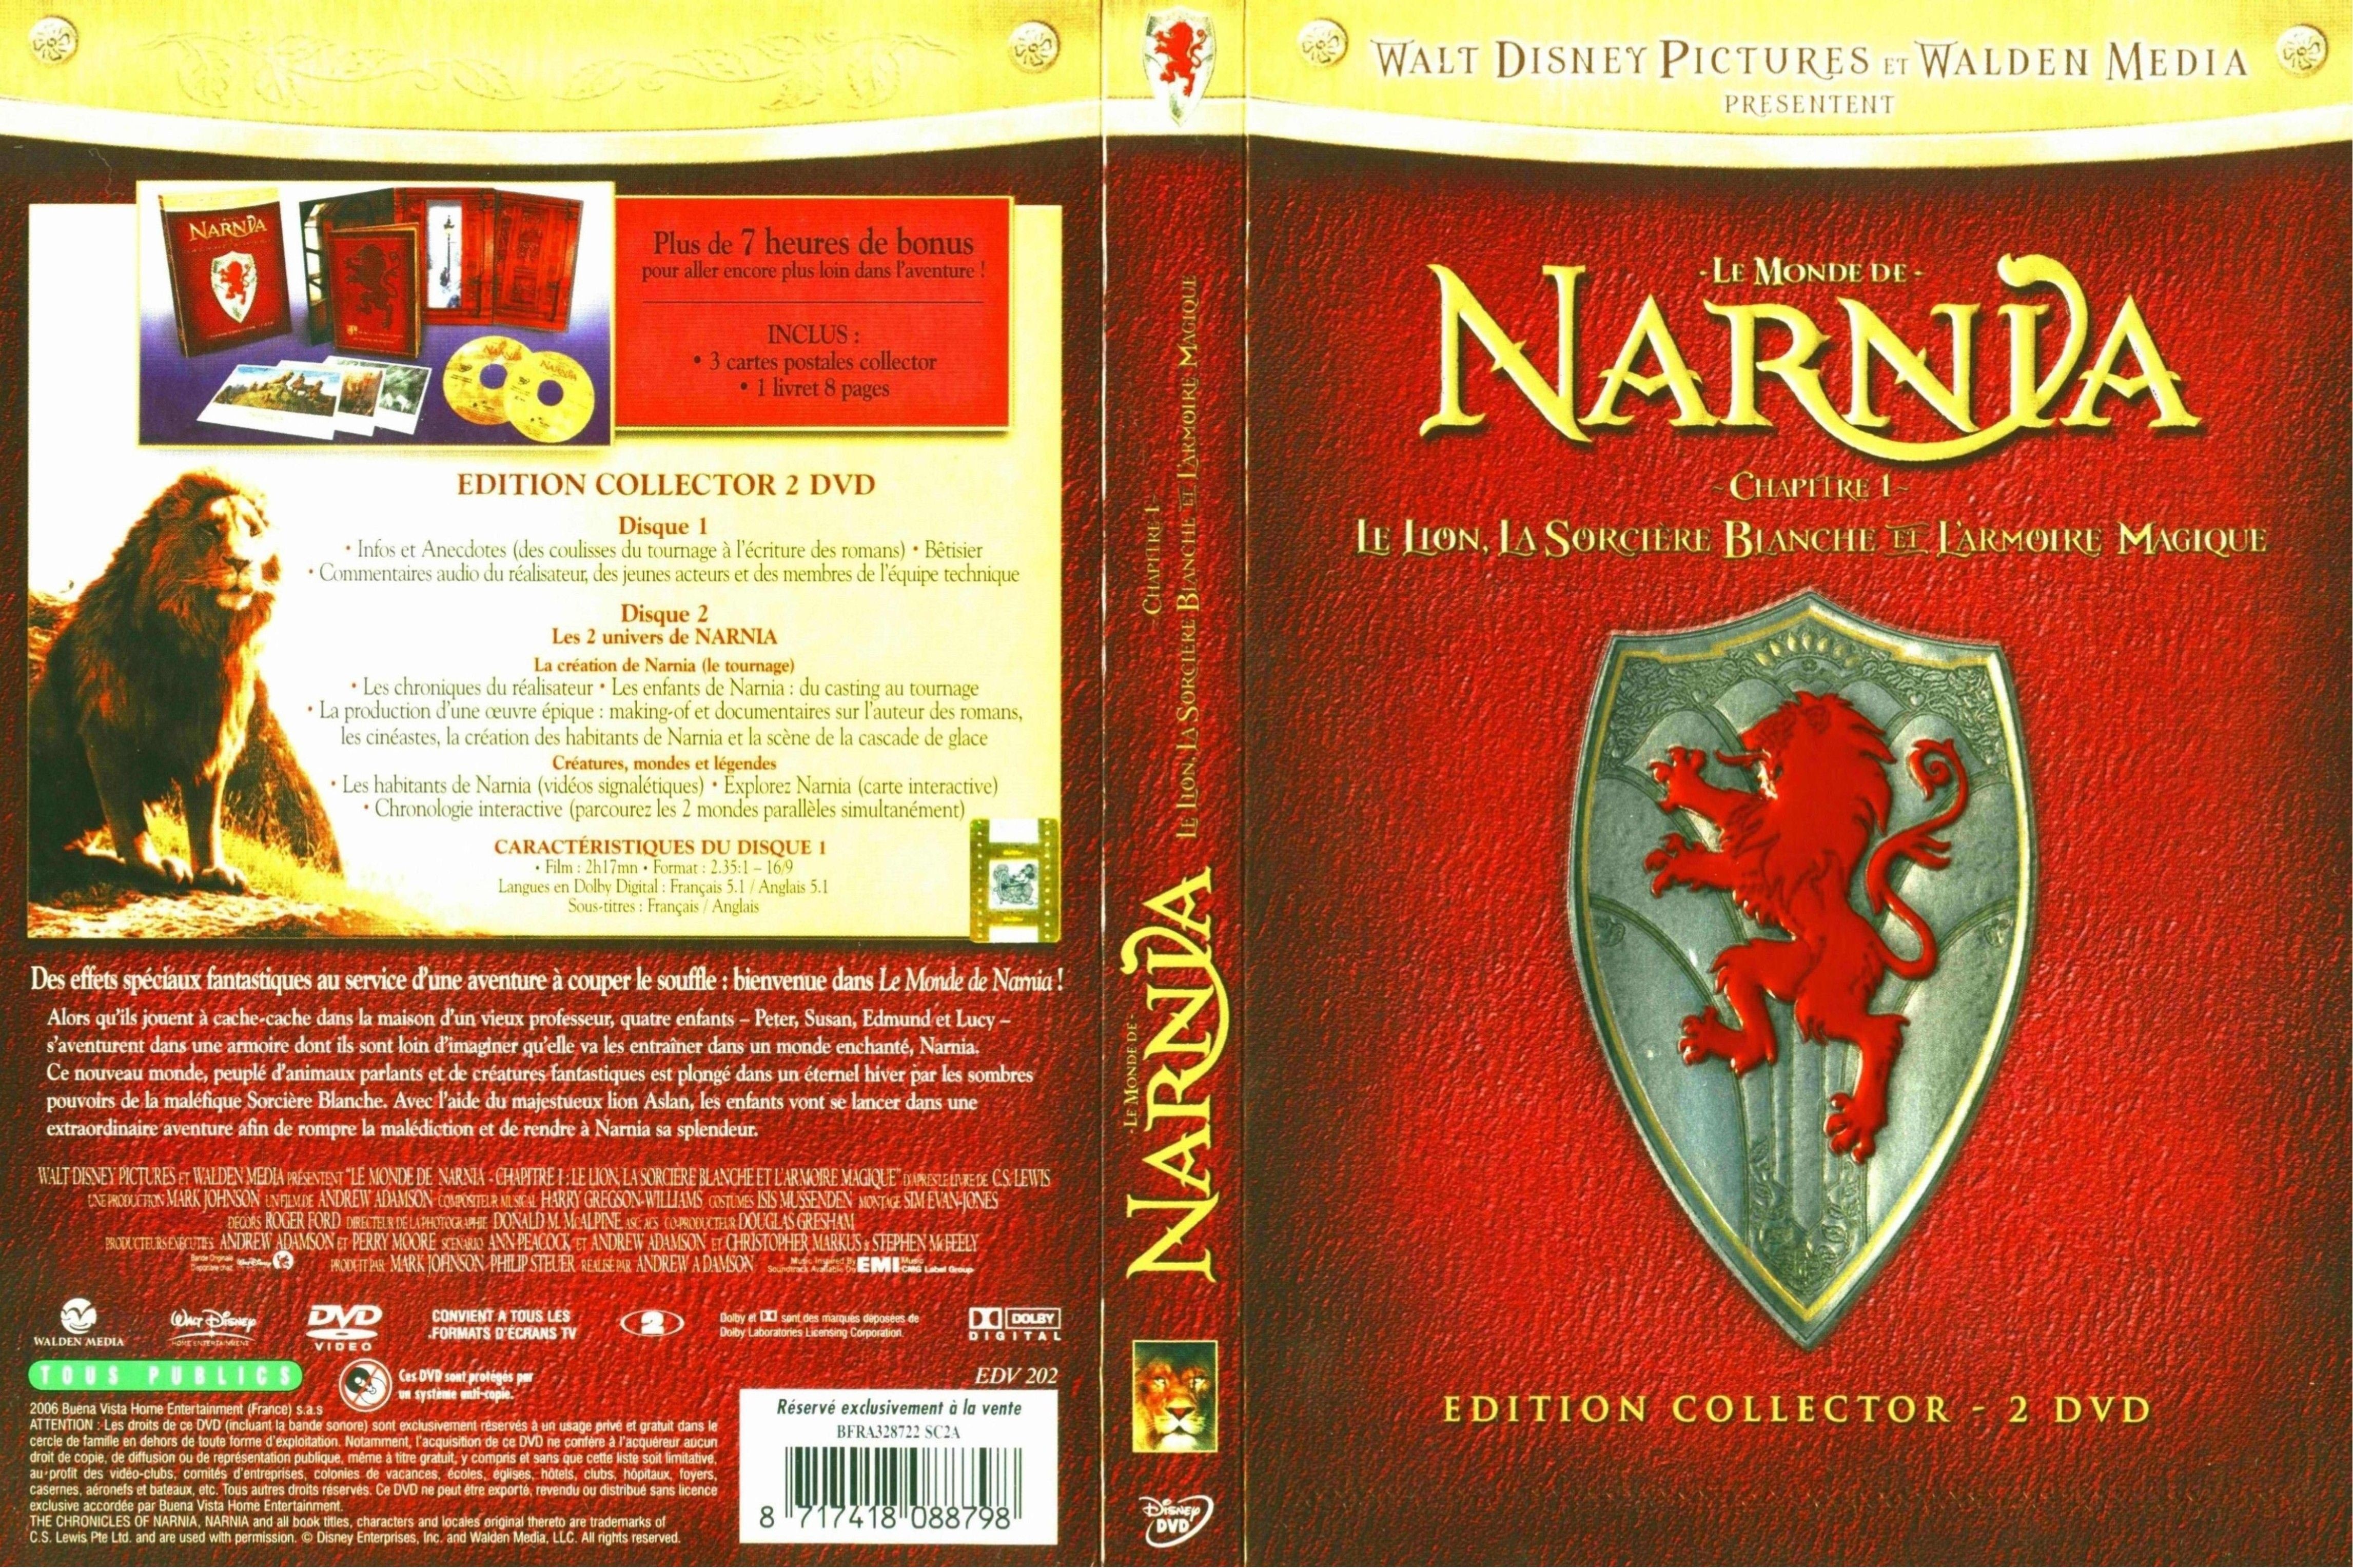 Jaquette DVD Le monde de narnia chapitre 1 v4